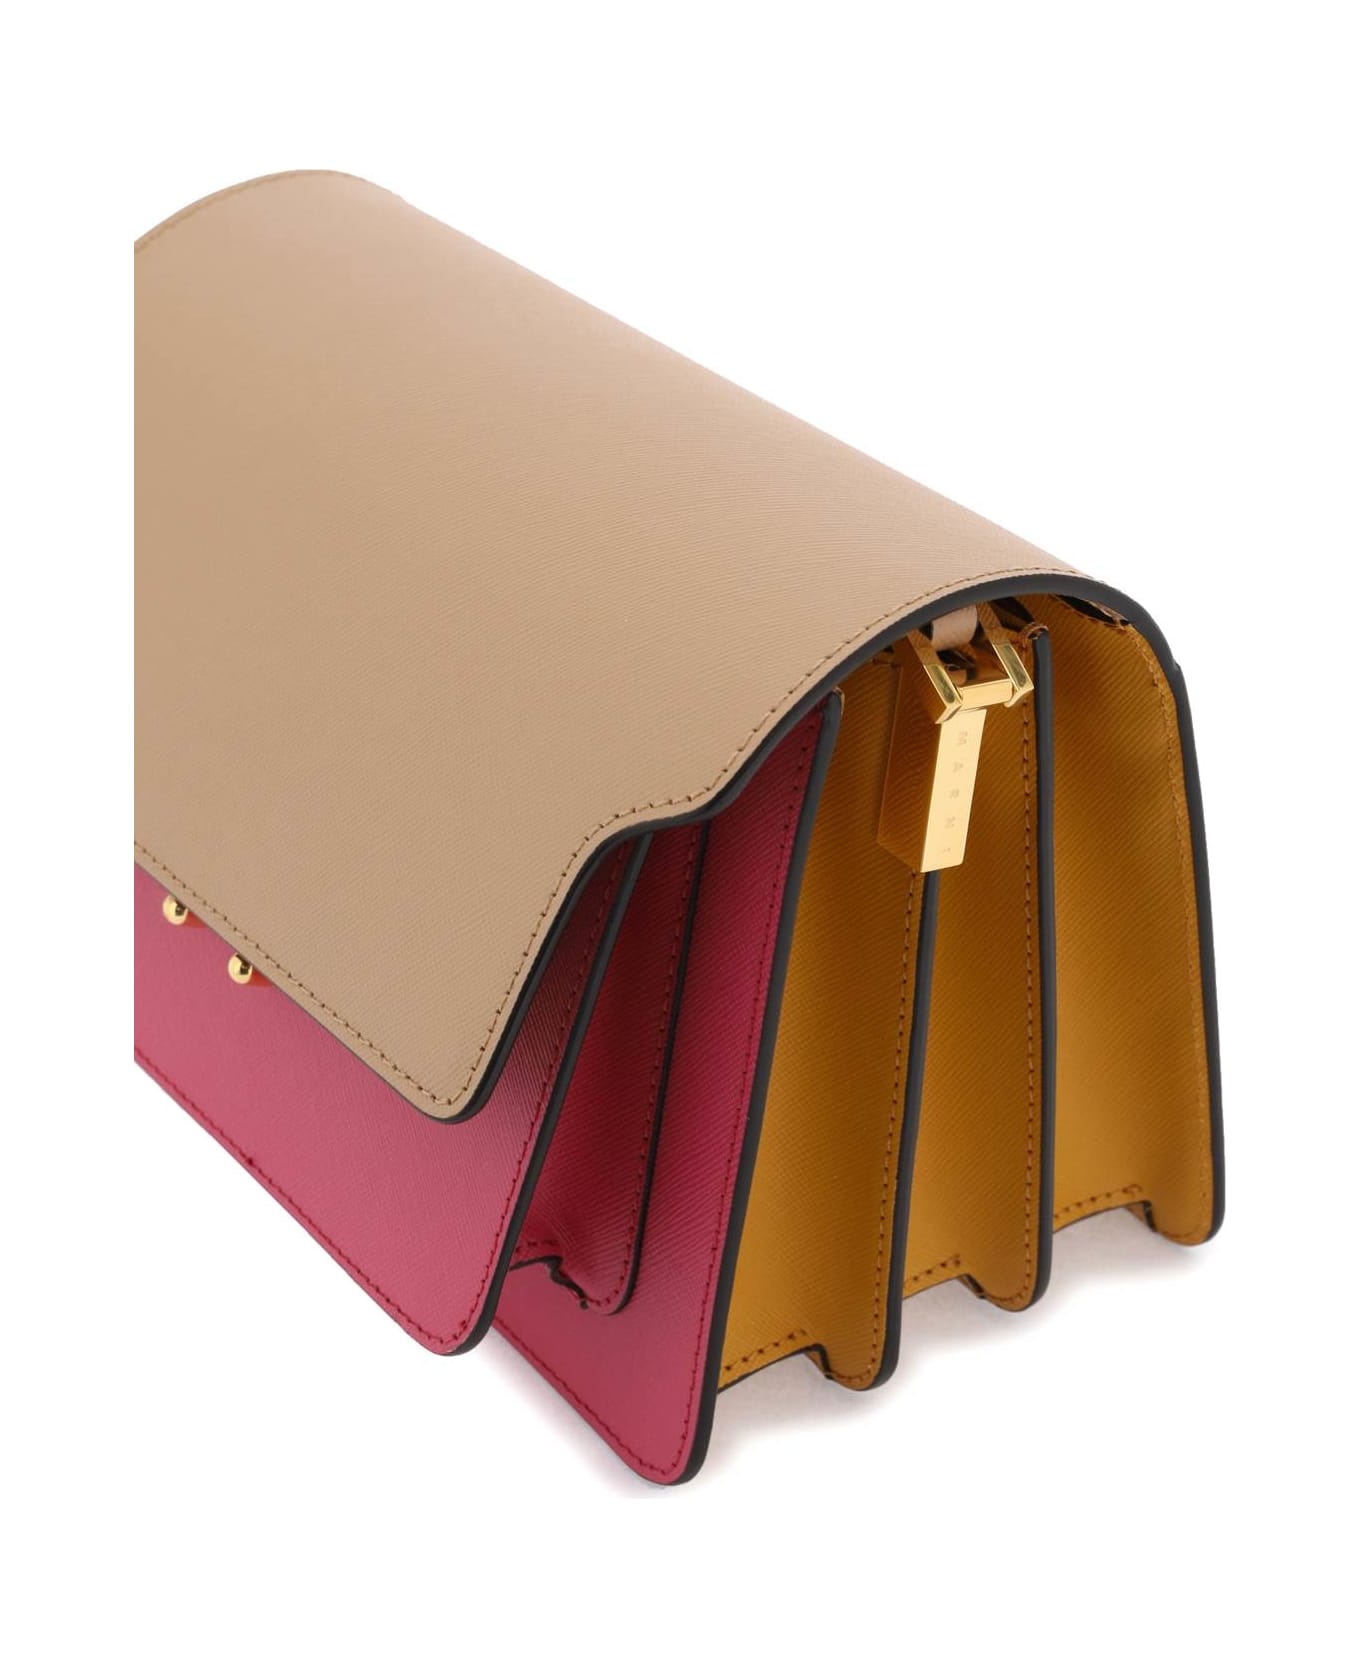 Marni Tricolor Leather Medium Trunk Bag - POMPEII LIGHT ORCHID PUMPKIN (Beige)